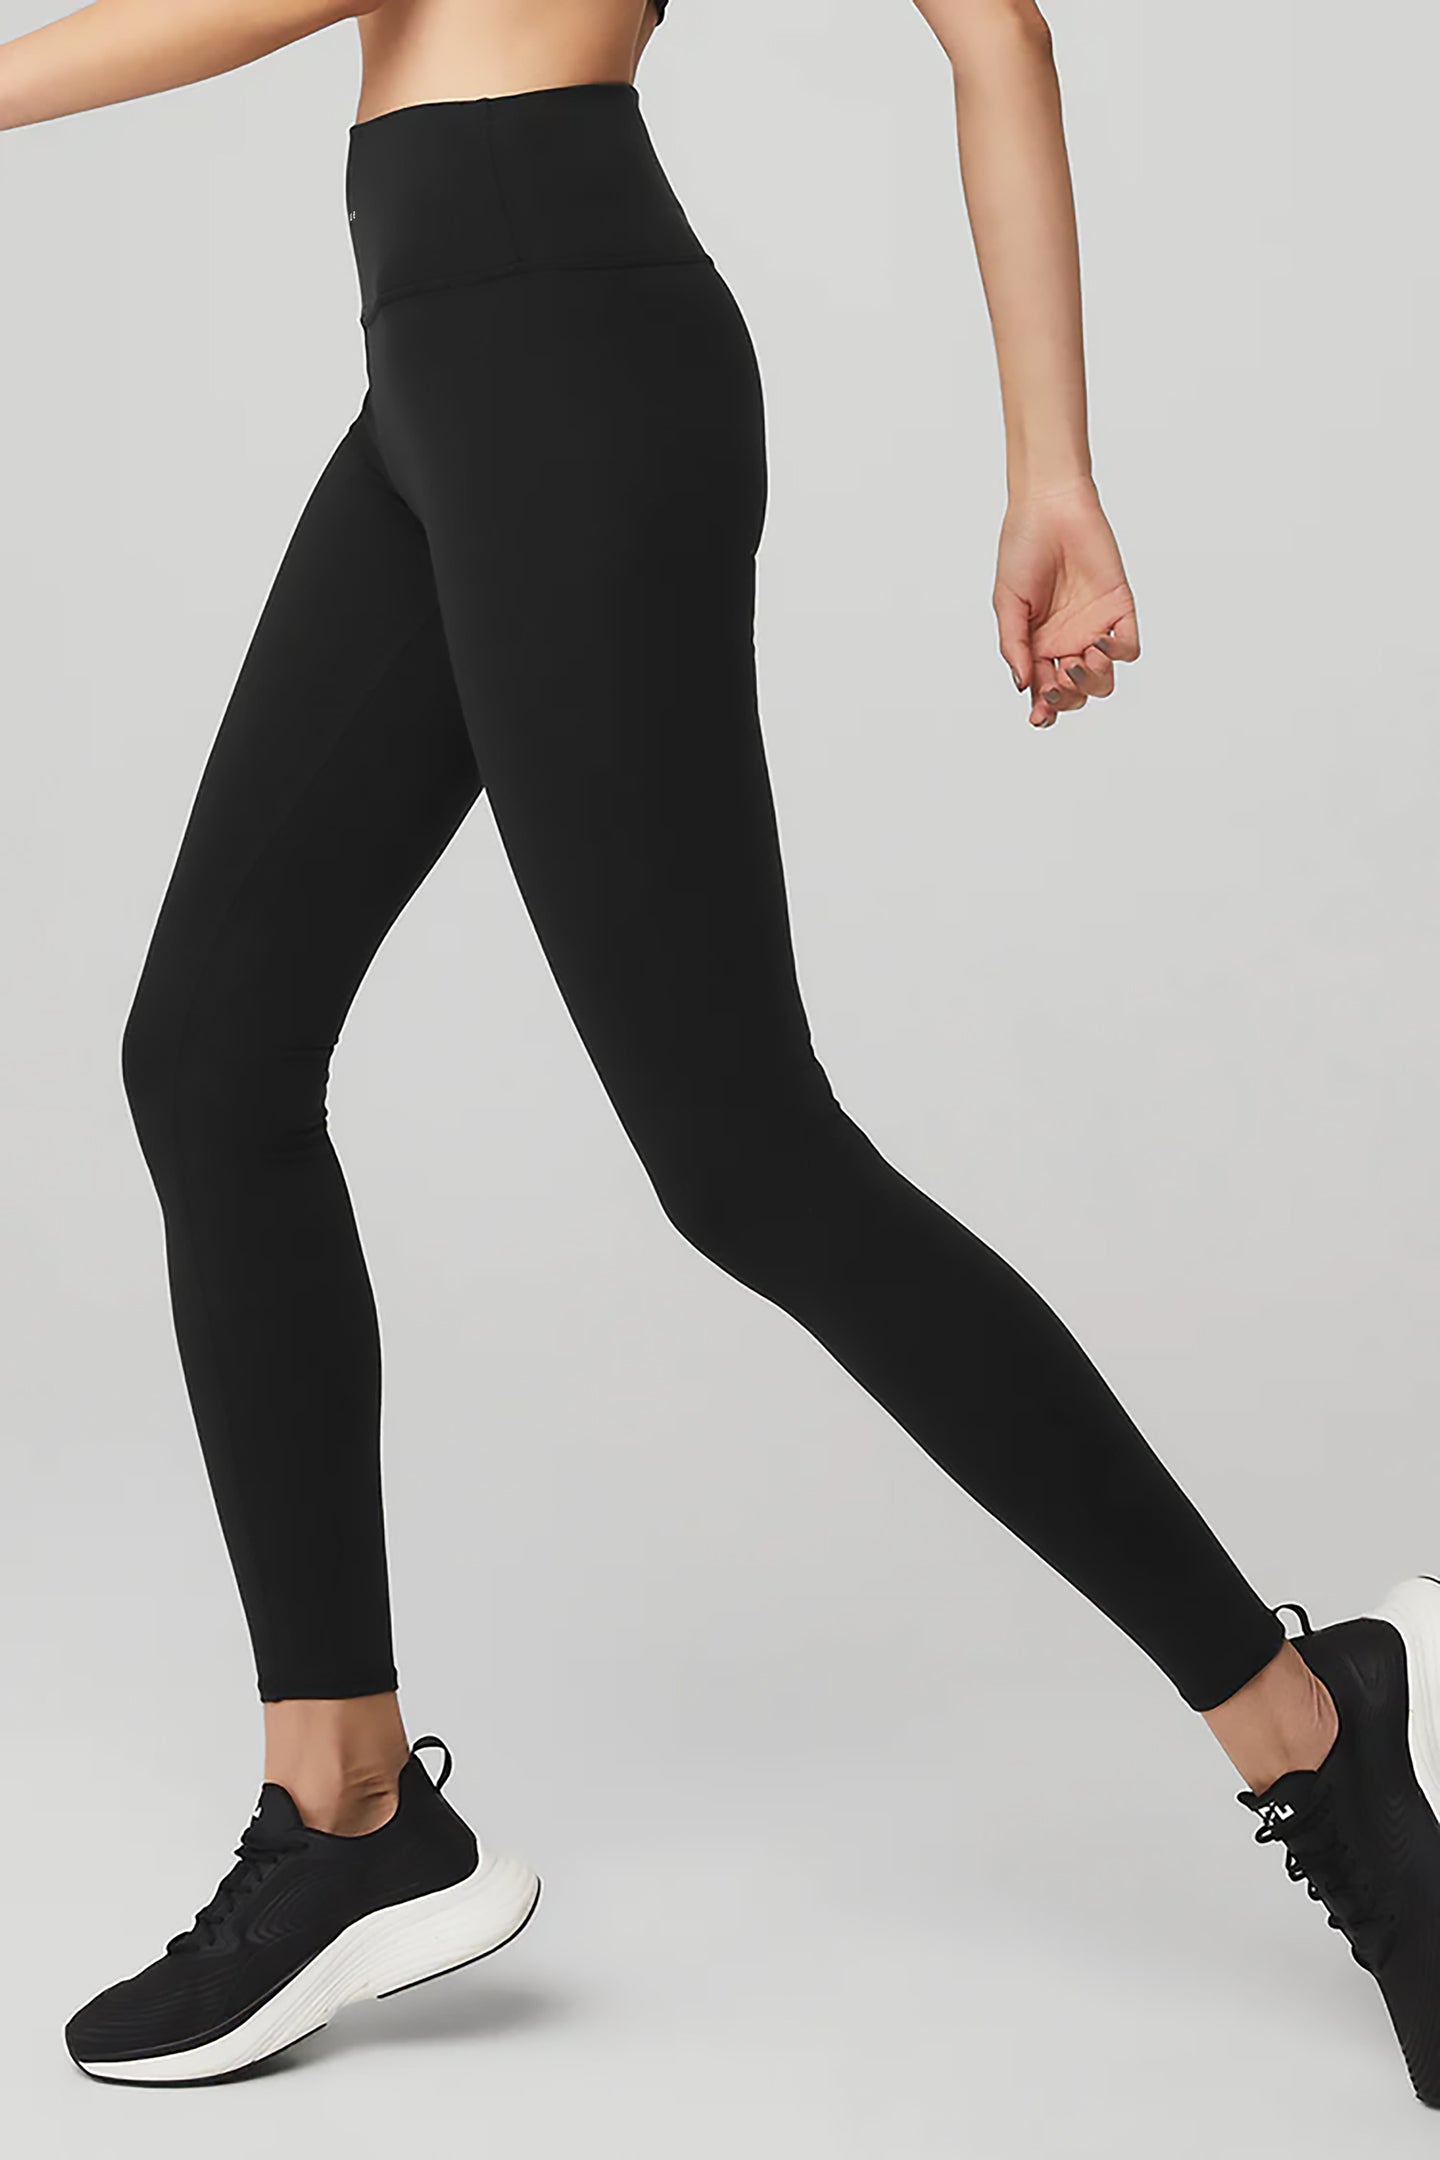 Neue Supply Co. Women's Leggings in Black